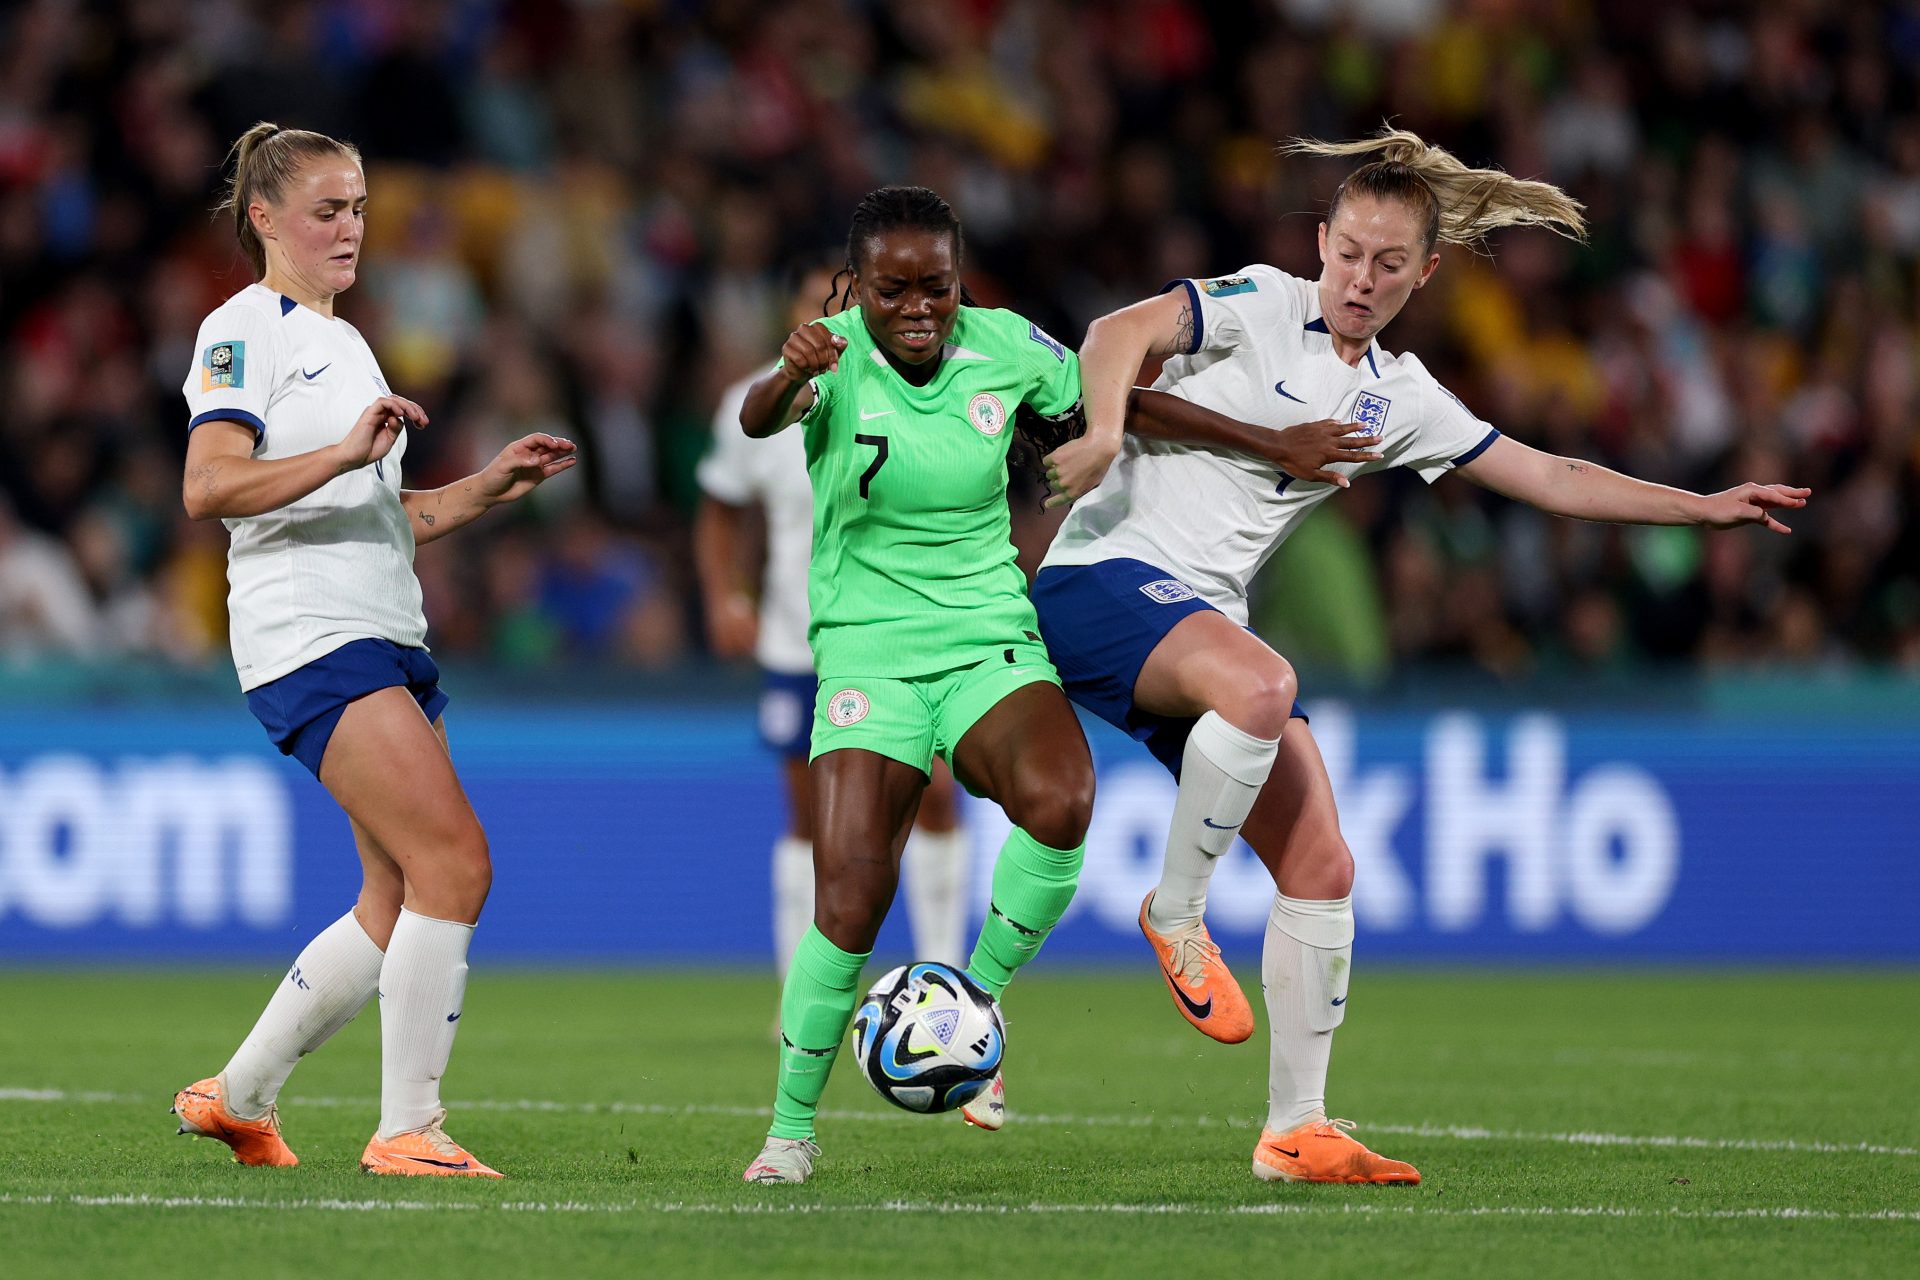 Quarter-Final 4: England vs Colombia